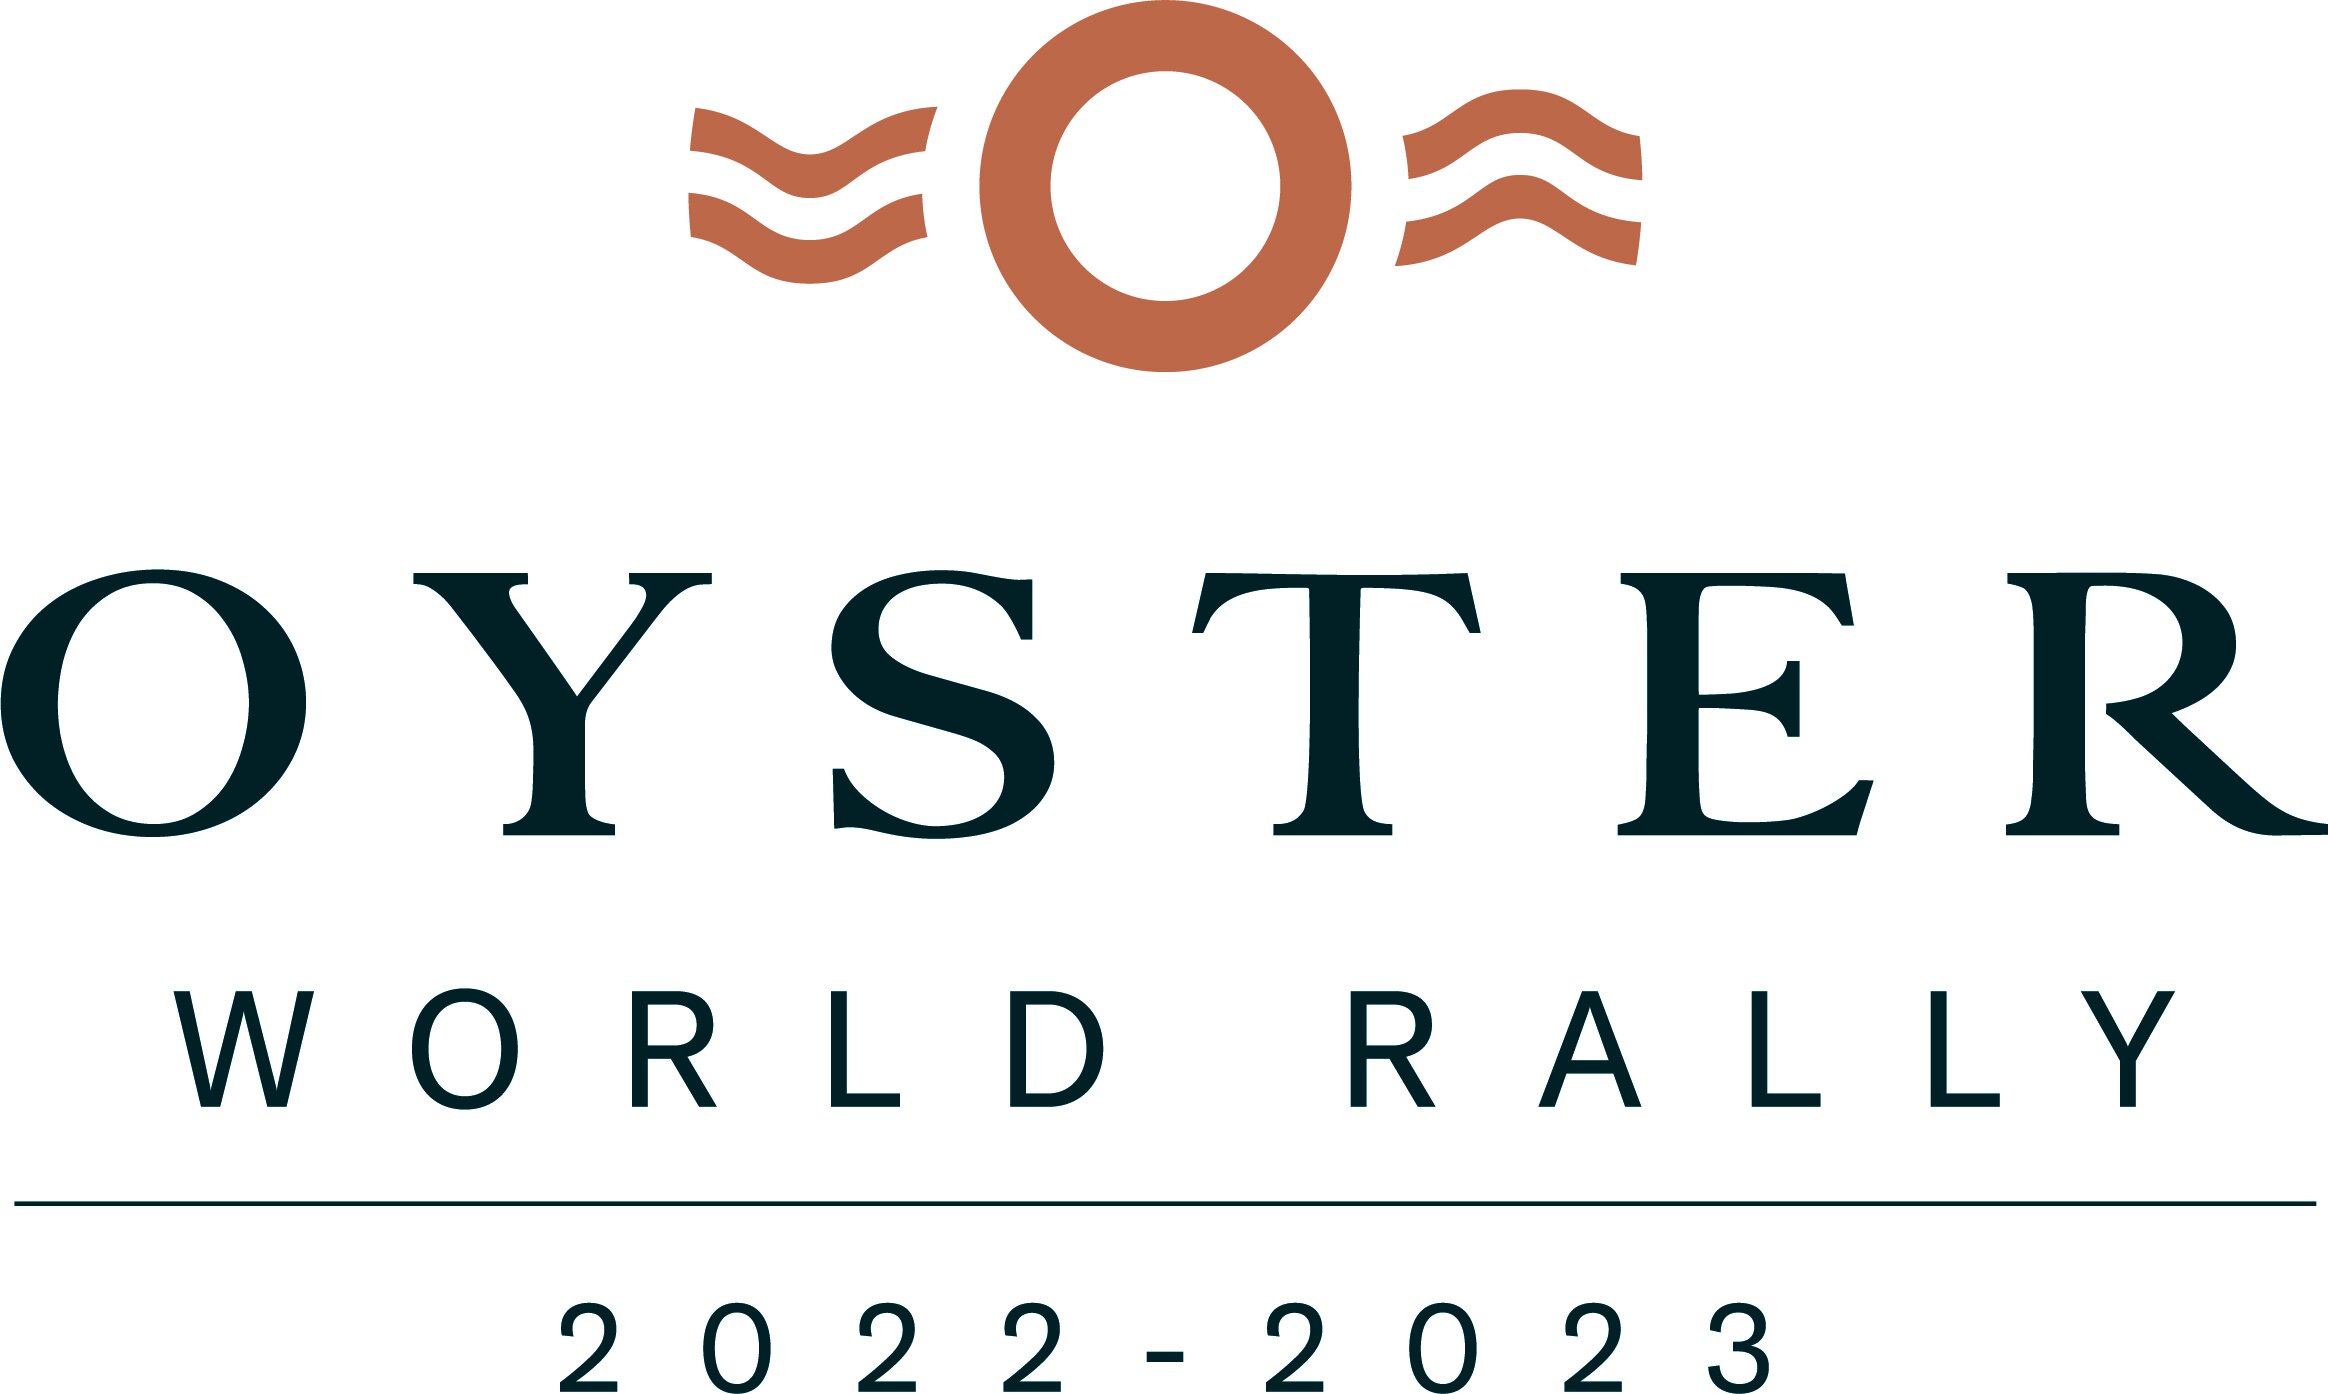 OYSTER_WORLD_RALLY_2022-2023_CMYK_2020 (002).jpg